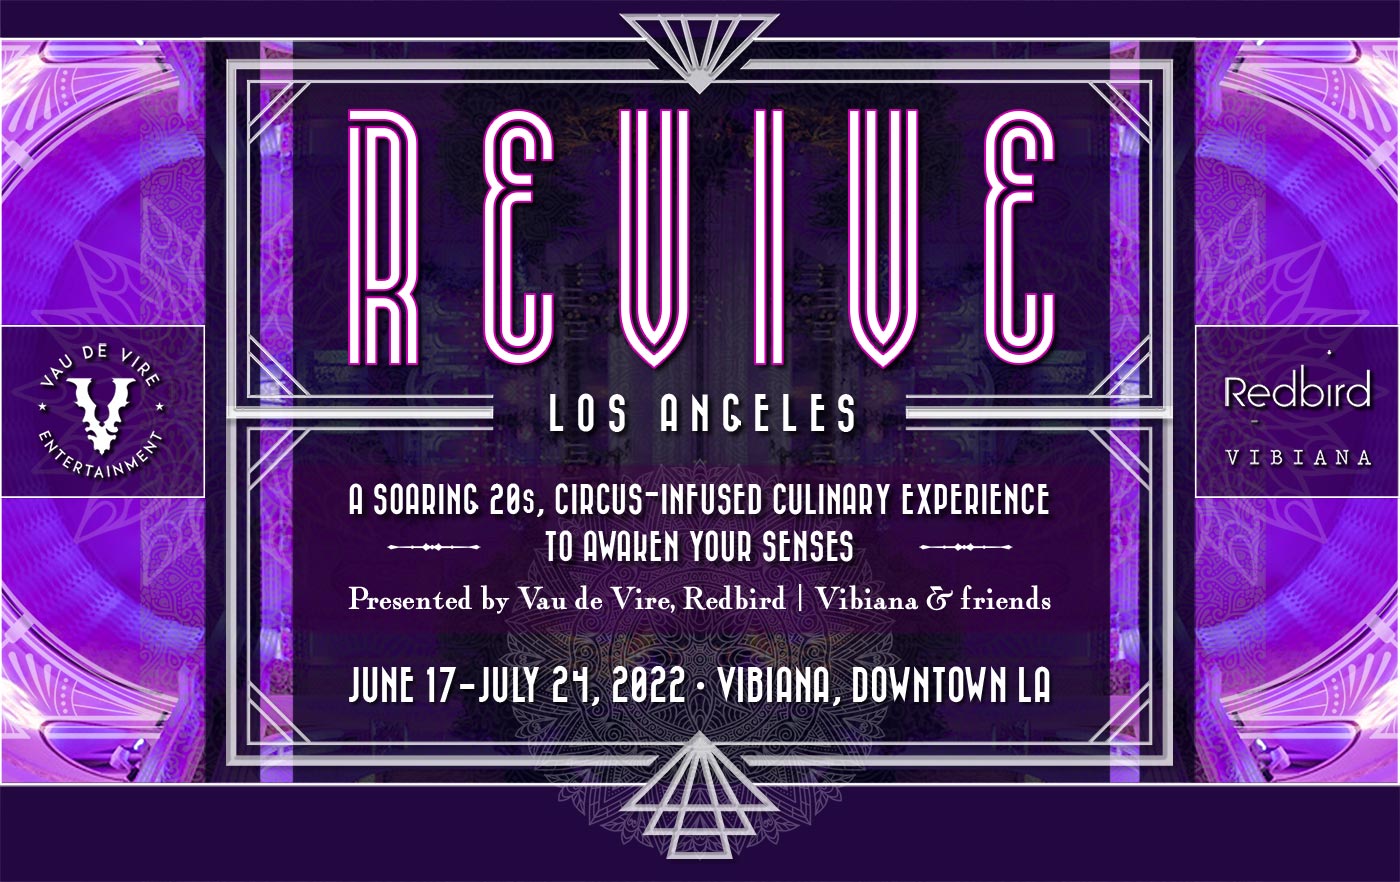 Vau de Vire, Redbird | Vibiana & friends present Revive LA - June 17-July 24, 2022 - Vibiana, downtown Los Angeles